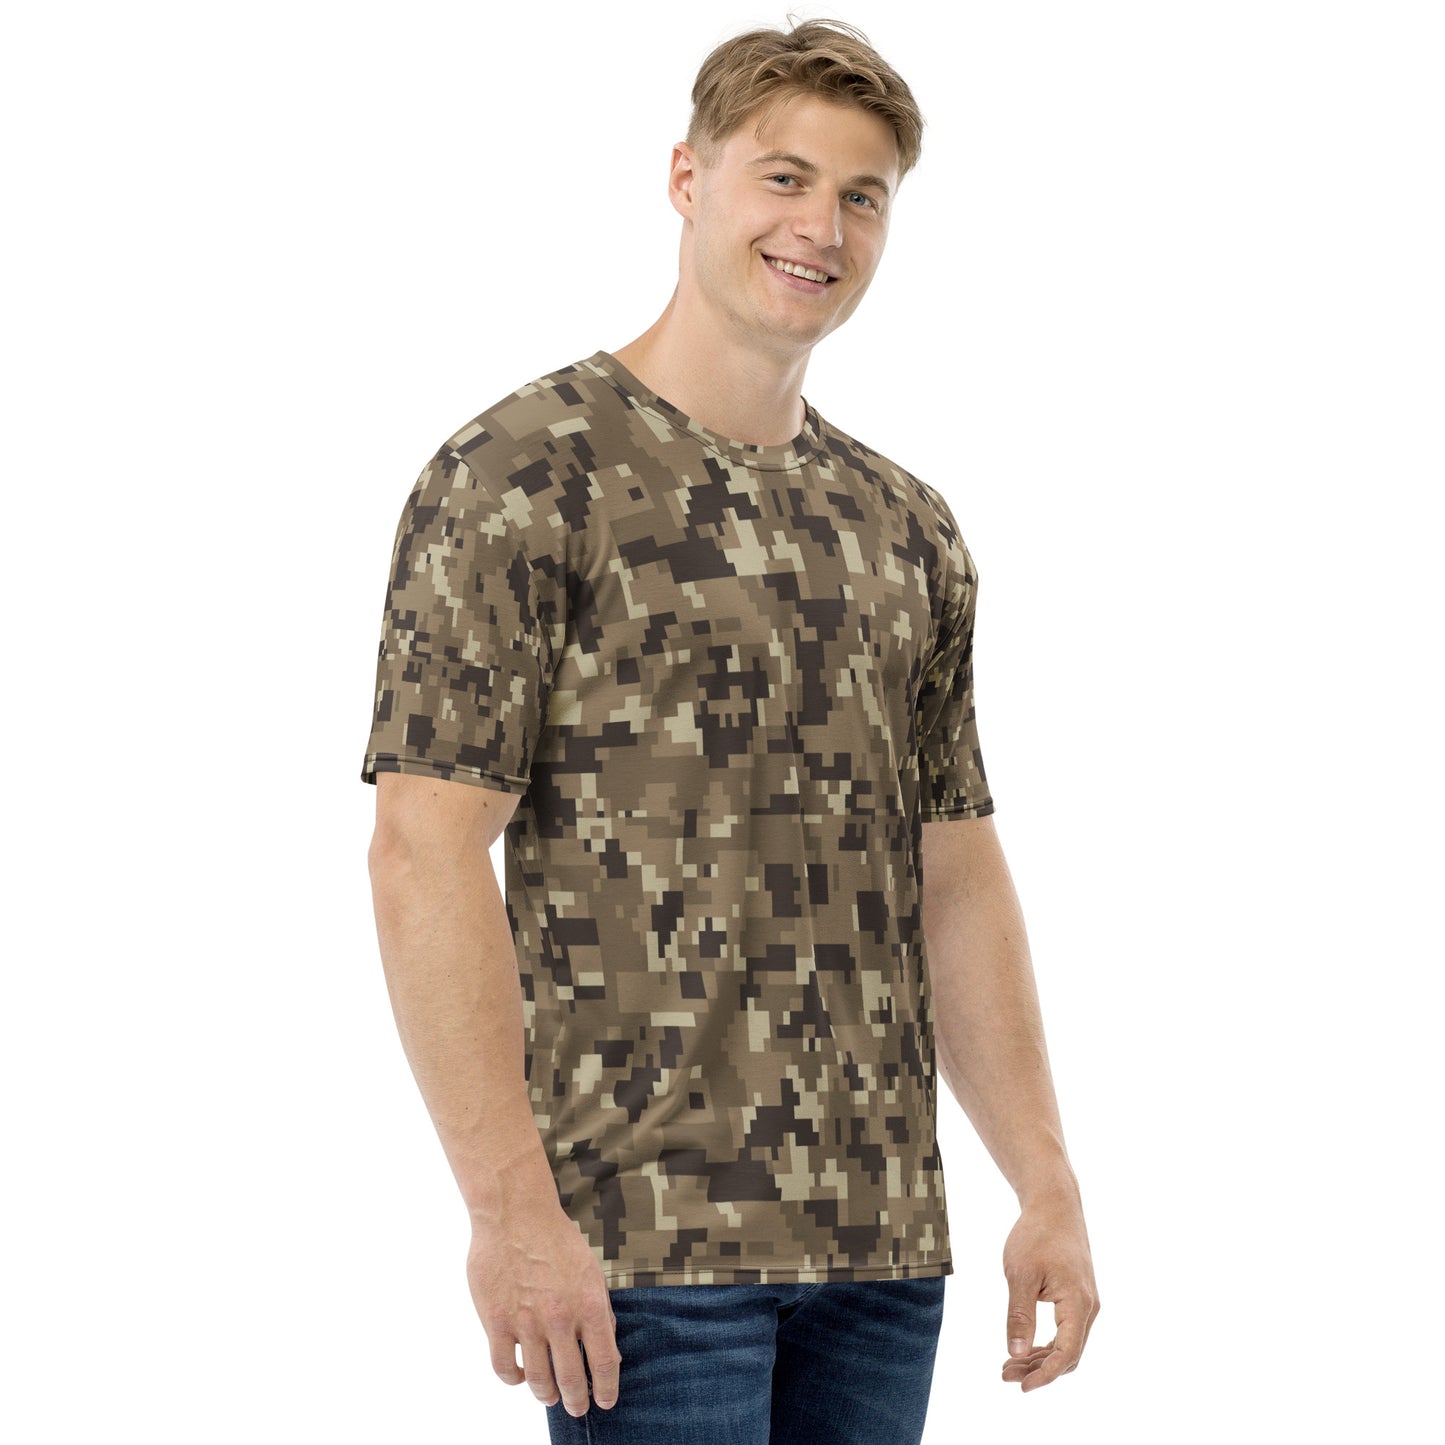 Men's camouflage print t-shirt